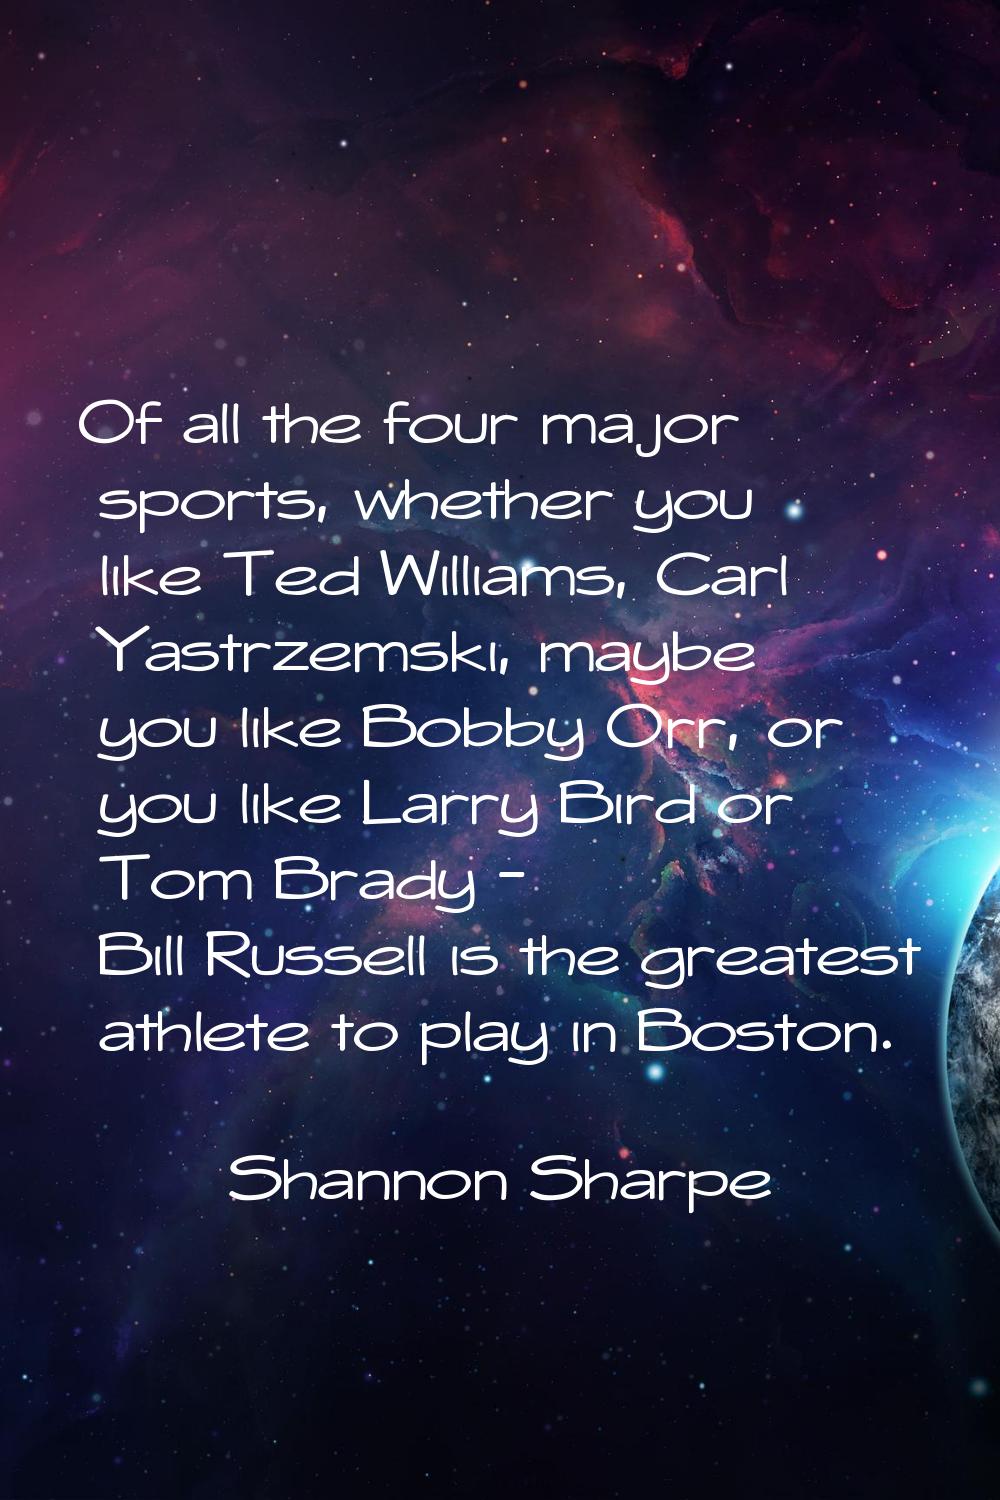 Of all the four major sports, whether you like Ted Williams, Carl Yastrzemski, maybe you like Bobby